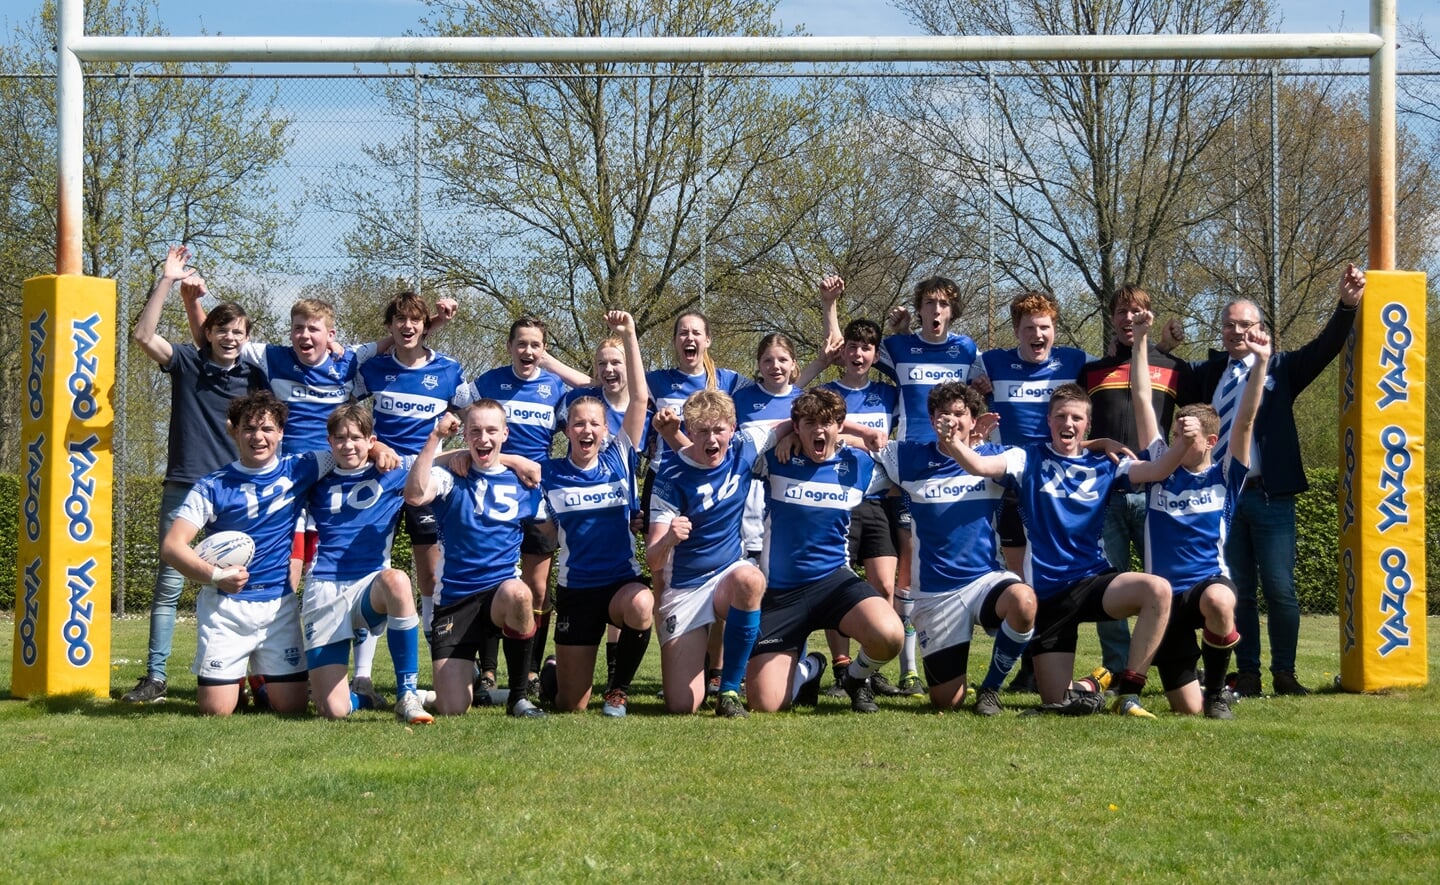 Rugby is een van de vele leuke sporten die worden beoefend in sportpark Den Wielakker/Munsel.